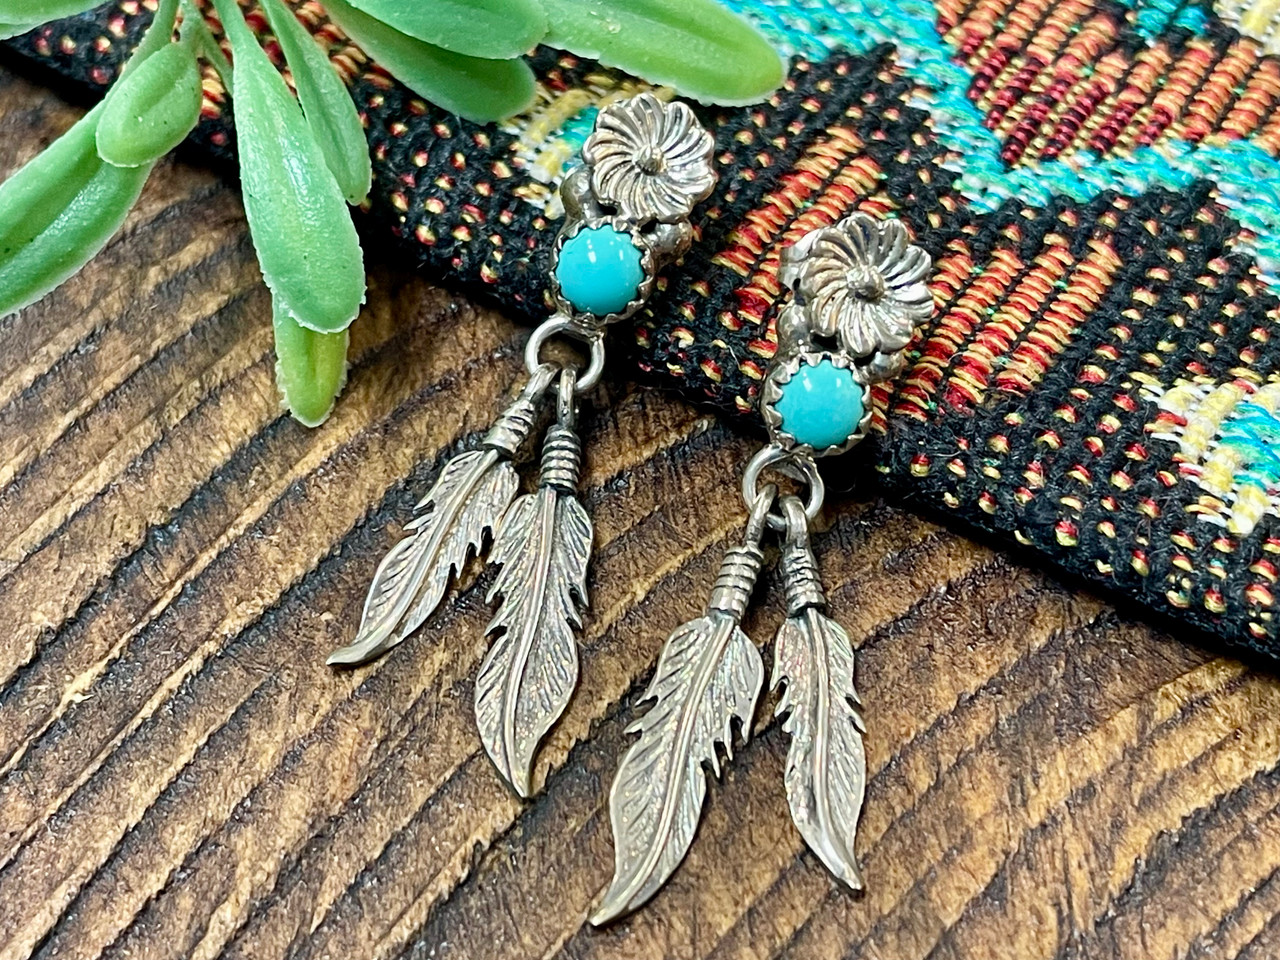 Turquoise Black & Gold Beading Earrings - Southwest Indian